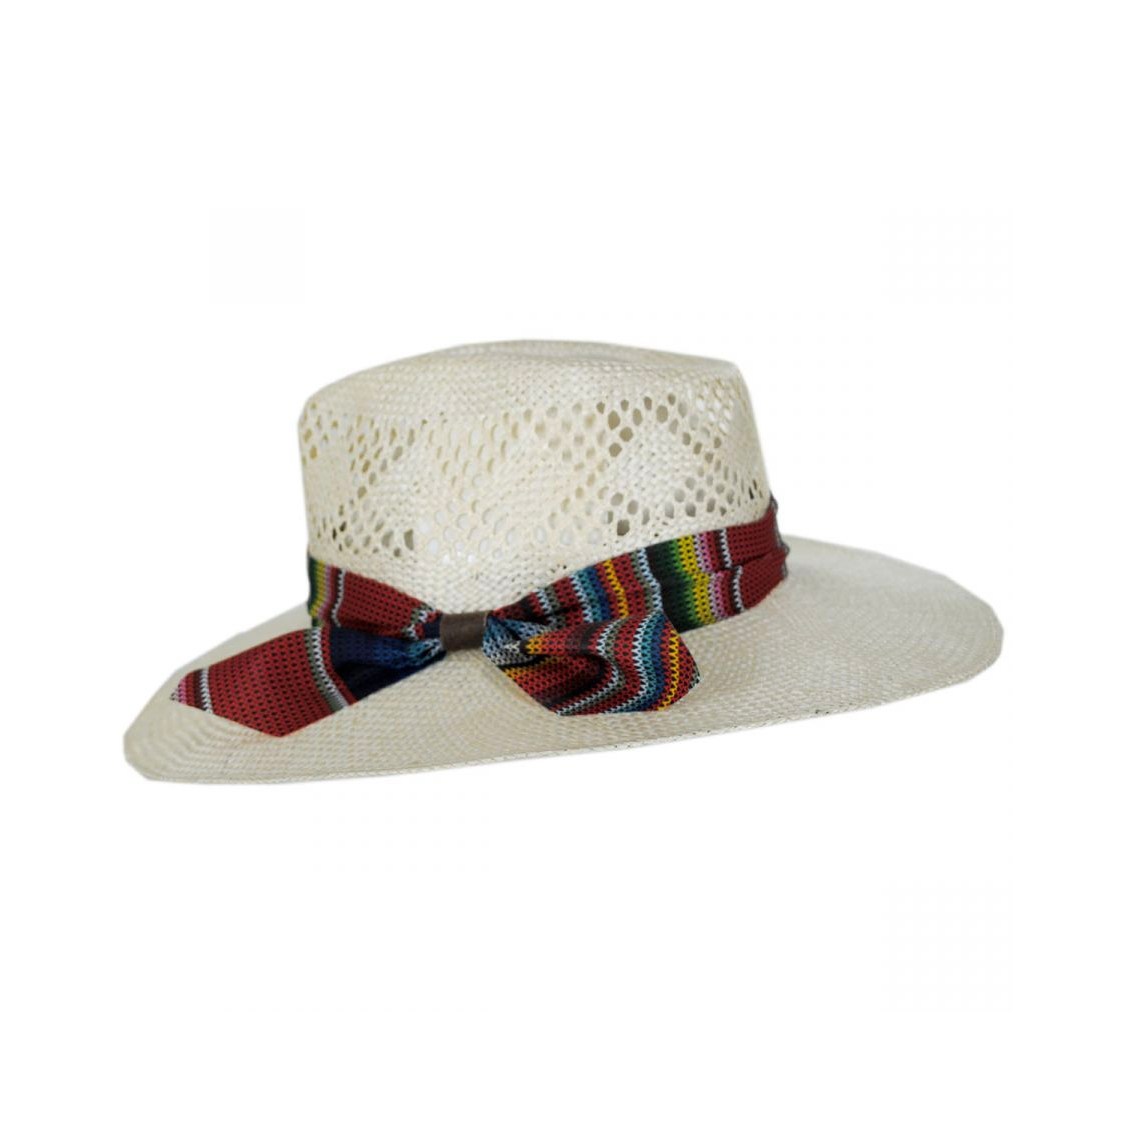 Charlie 1 Horse Fiesta Sisal Straw Hat - Natural